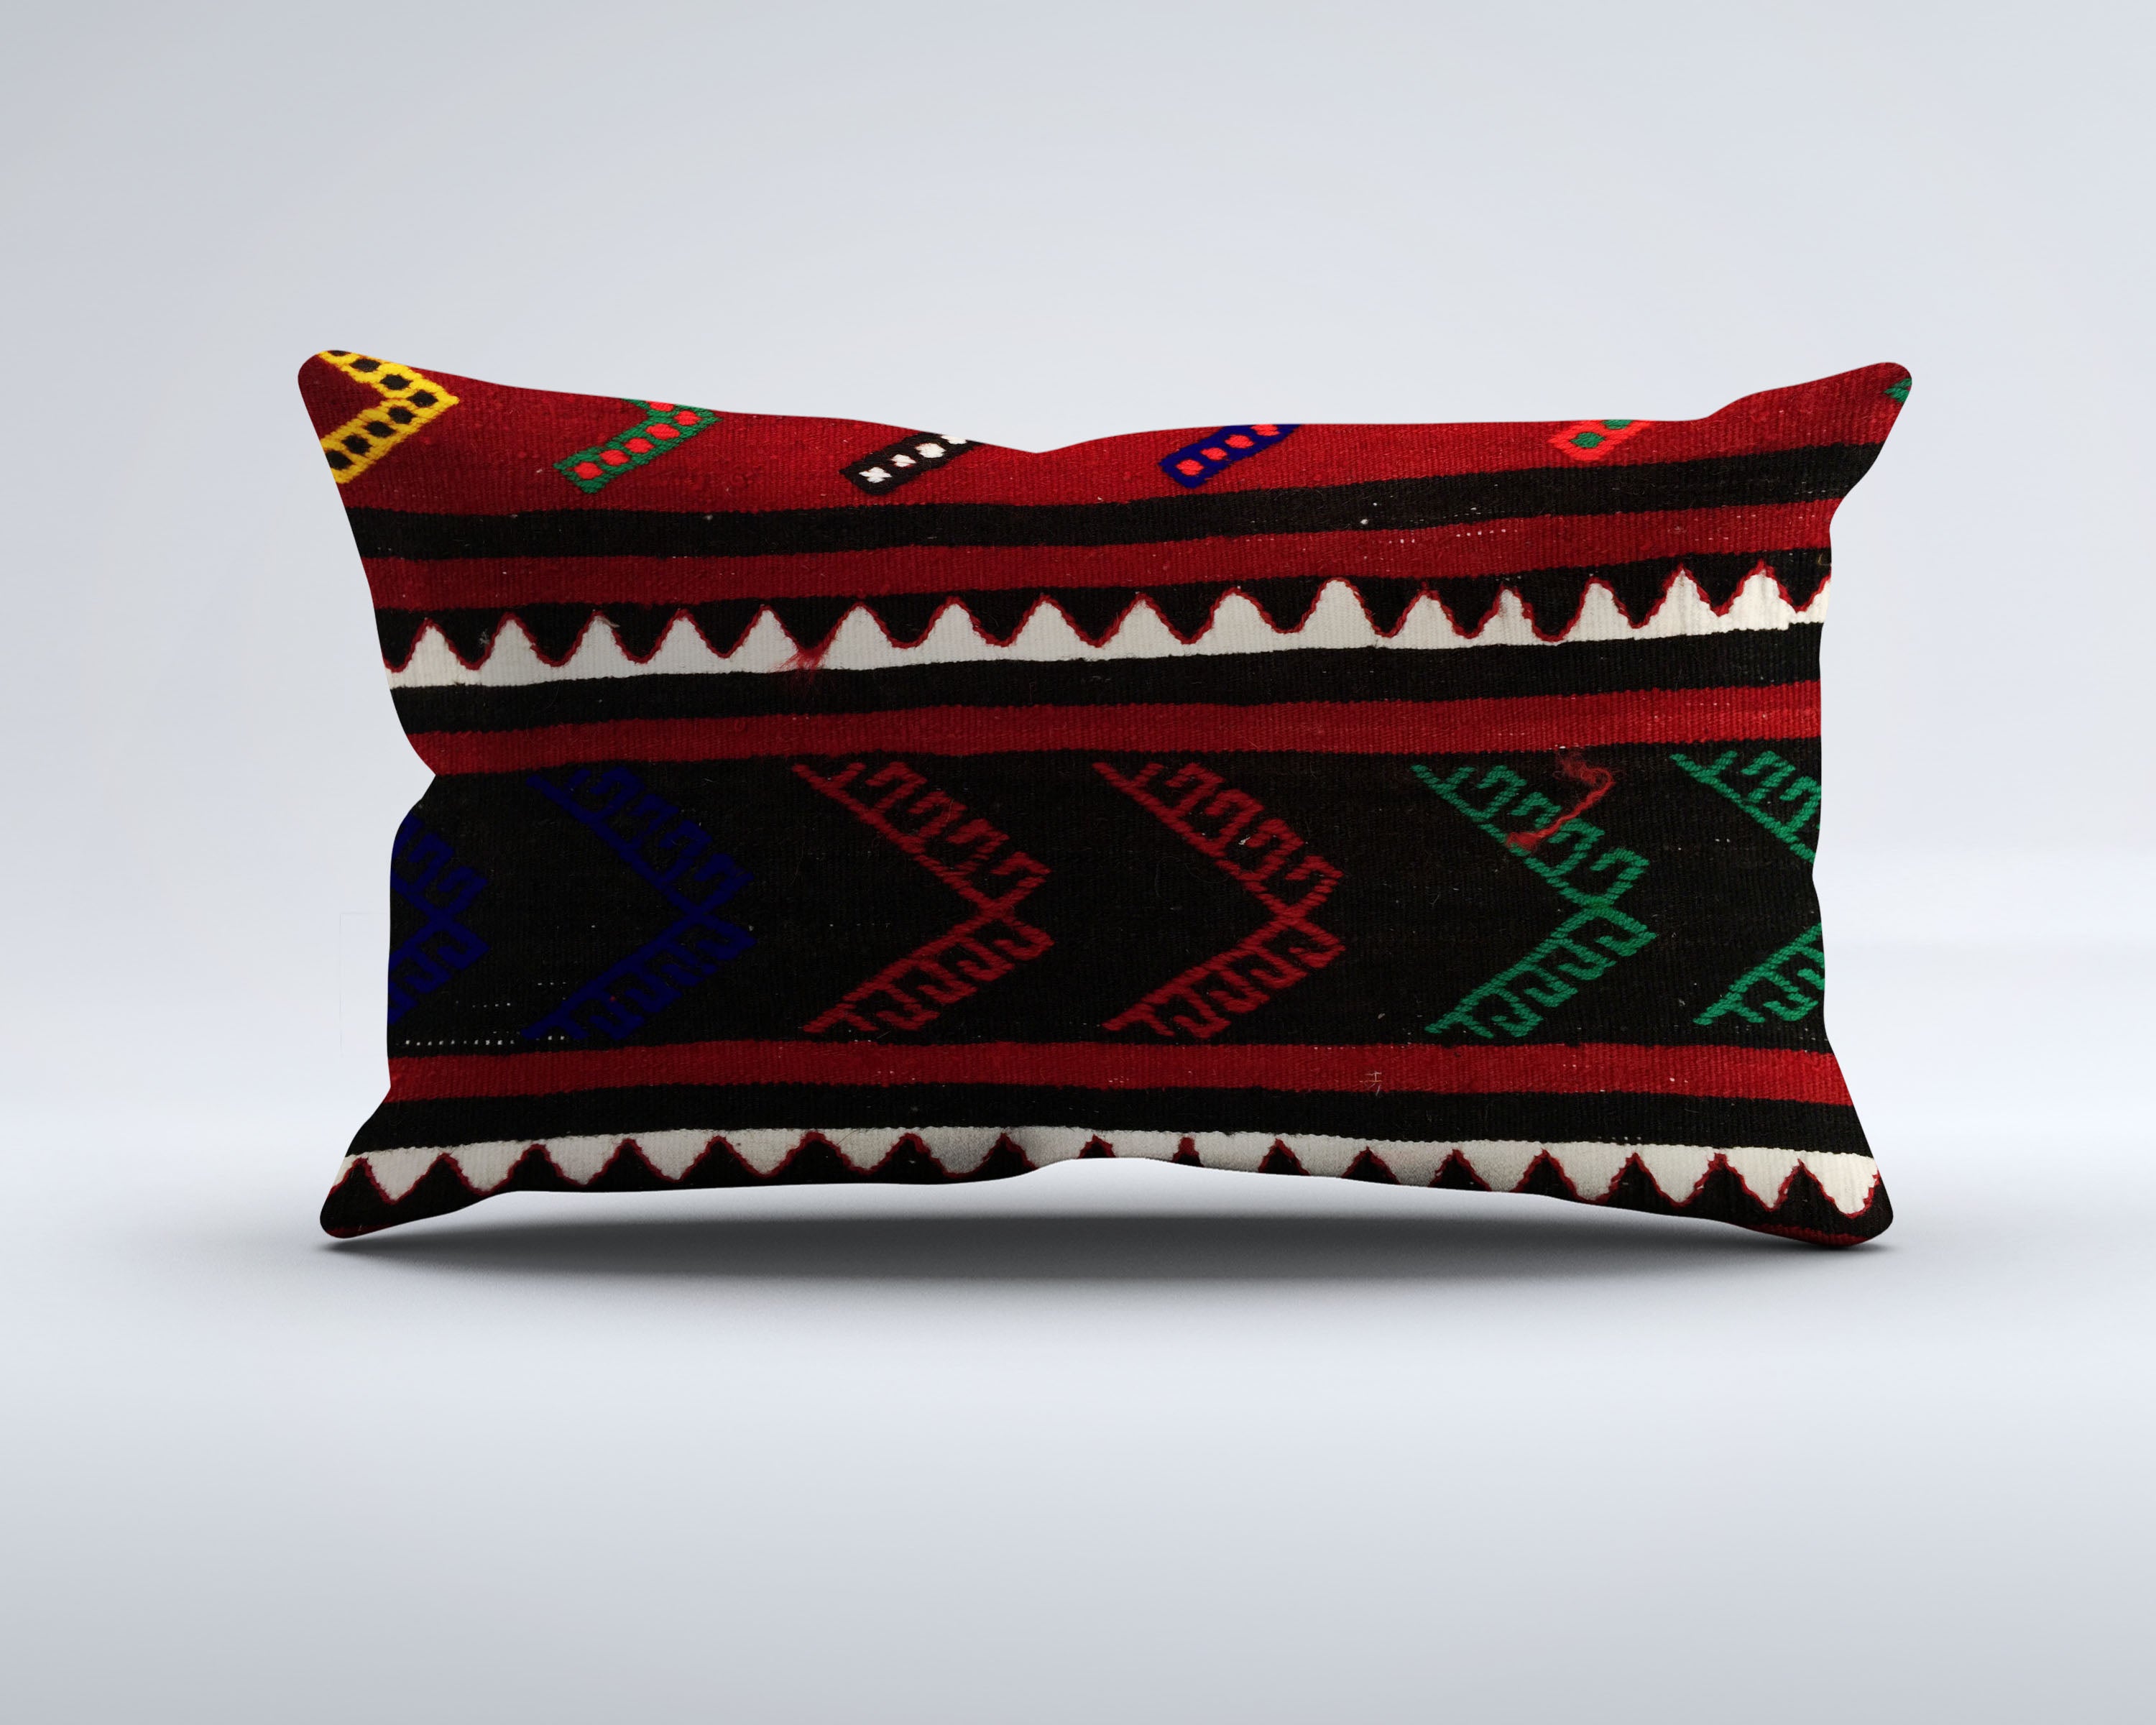 Vintage Turkish Kilim Cushion Cover, Pillowcase 30x50 cm 35370